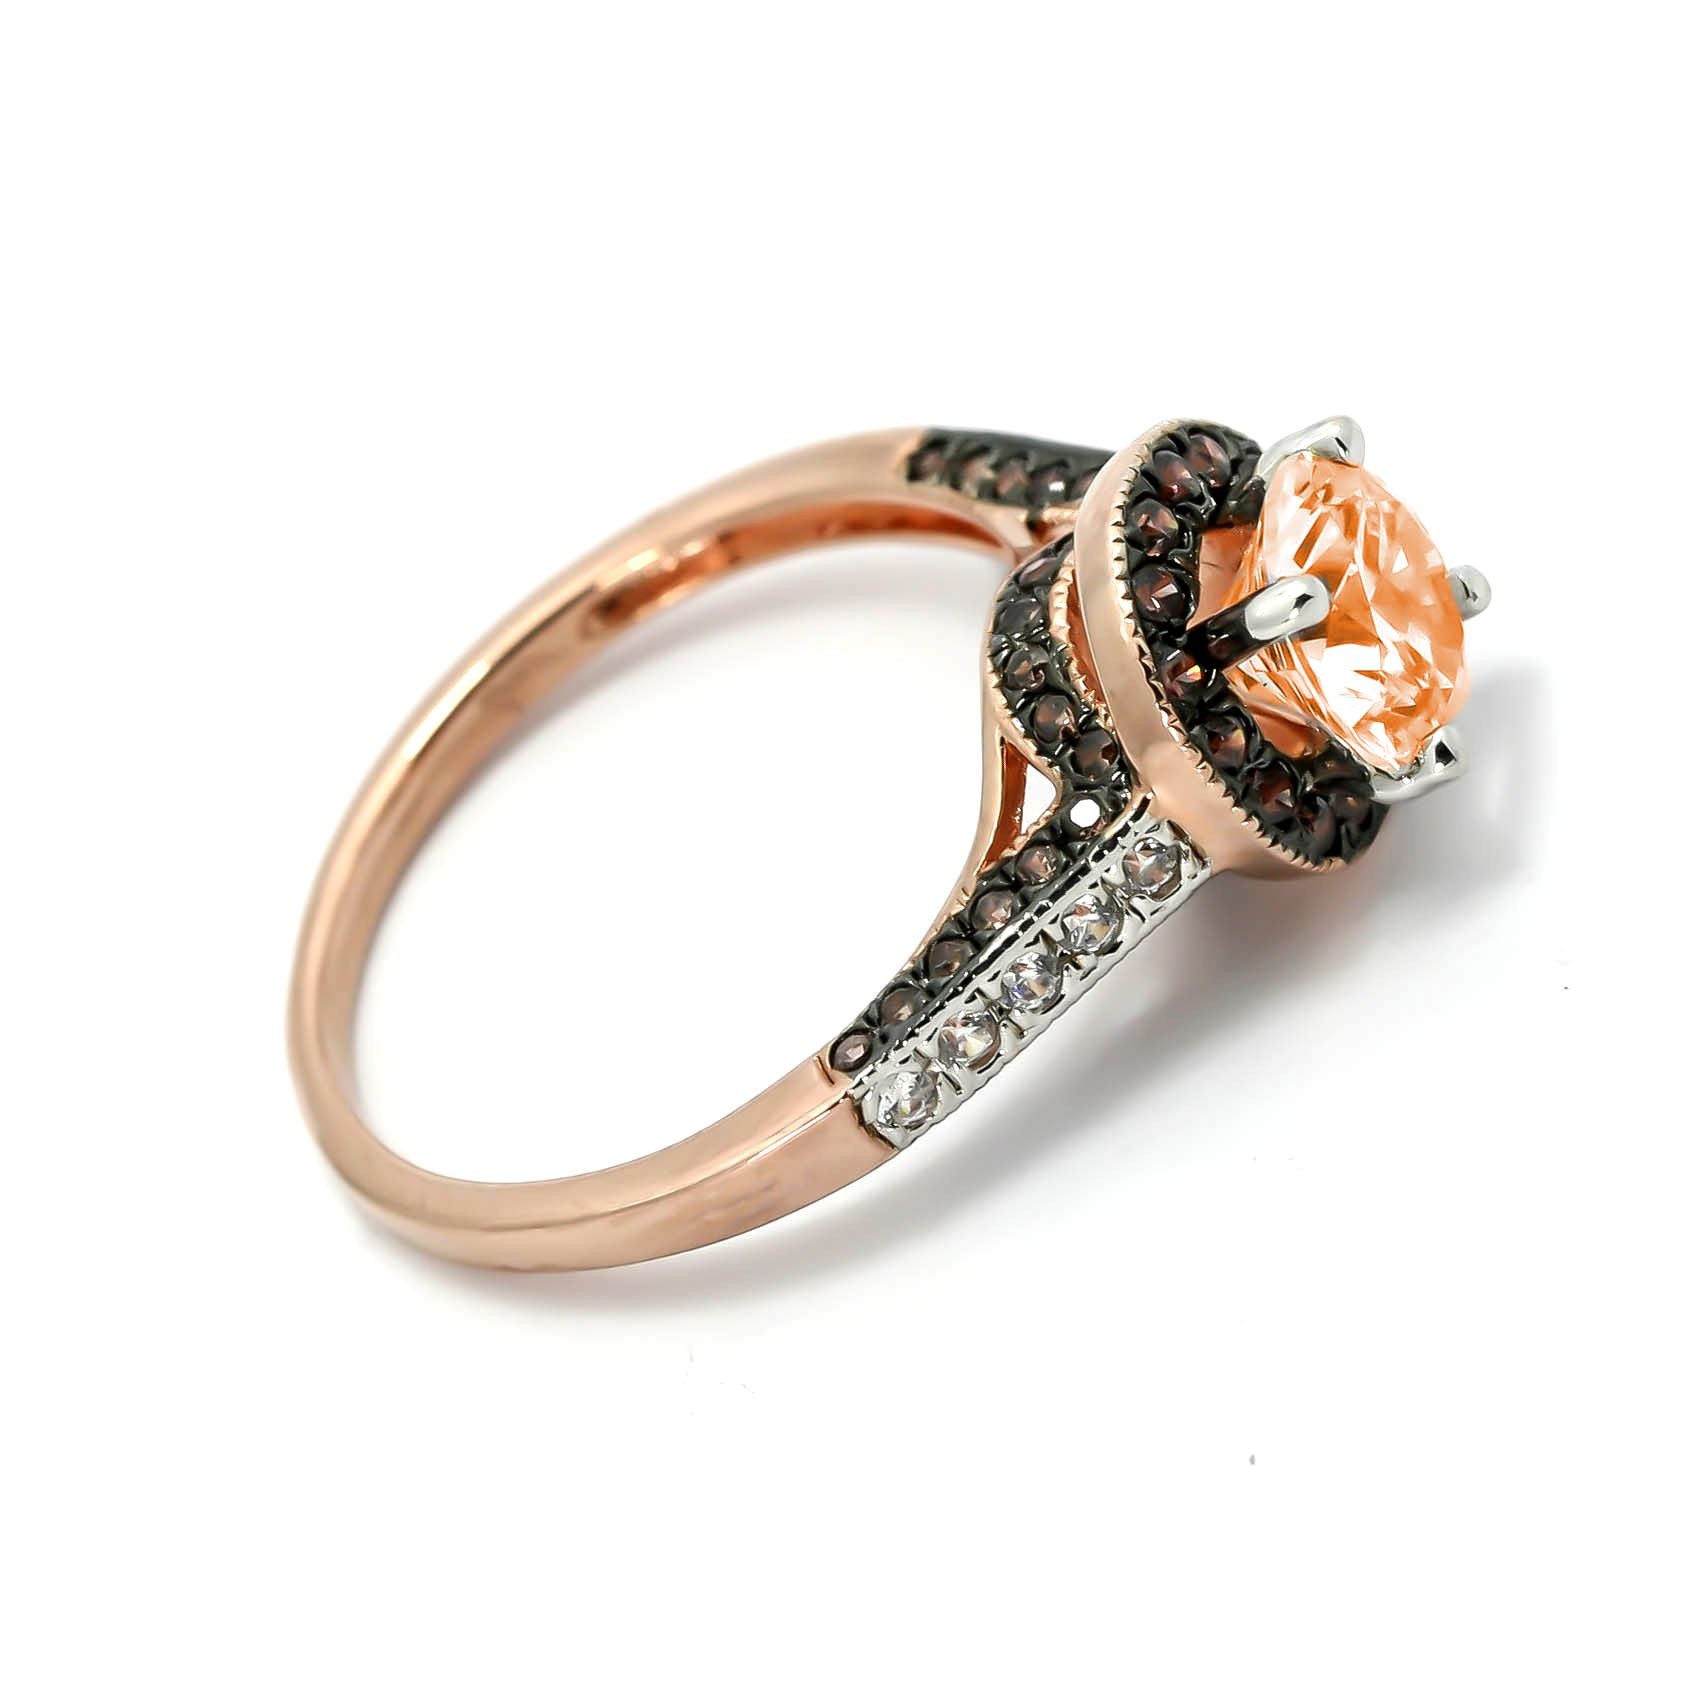 Engagement / Wedding Set, Unique 1 Carat Morganite Center Stone, Floating Halo Rose Gold  Anniversary Ring - MG94641